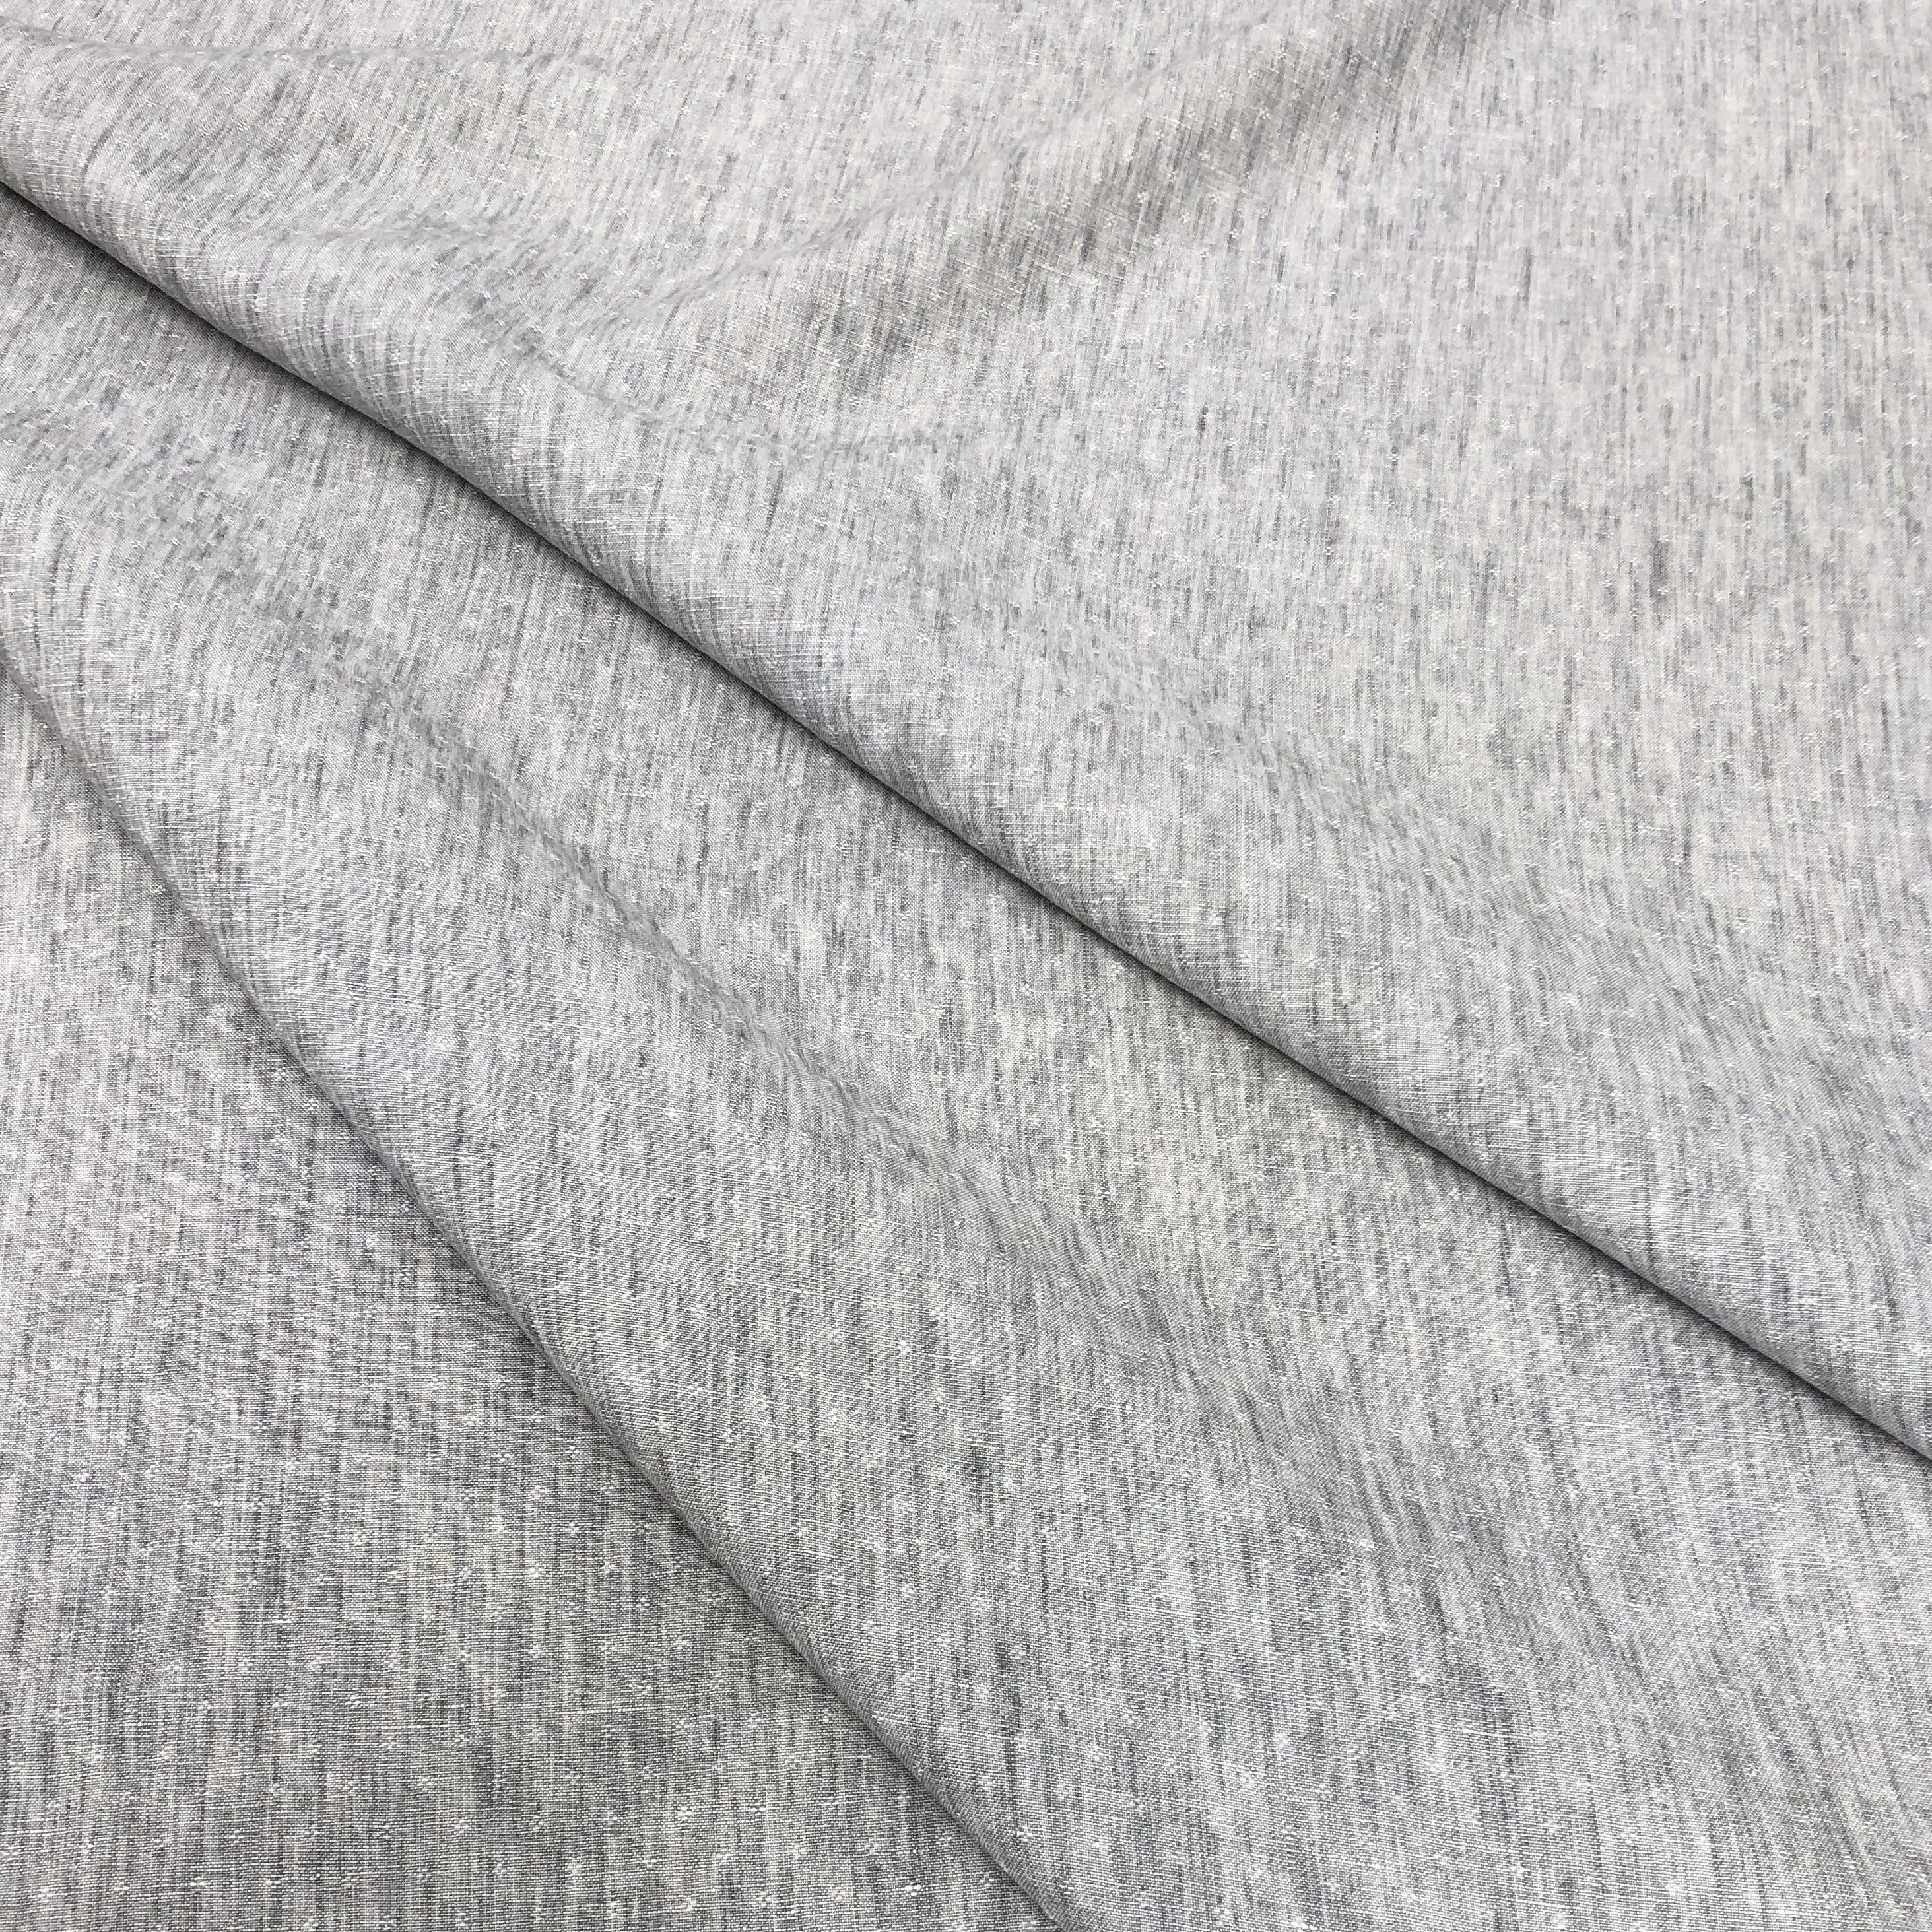 Printed linen – Tissus St-hubert